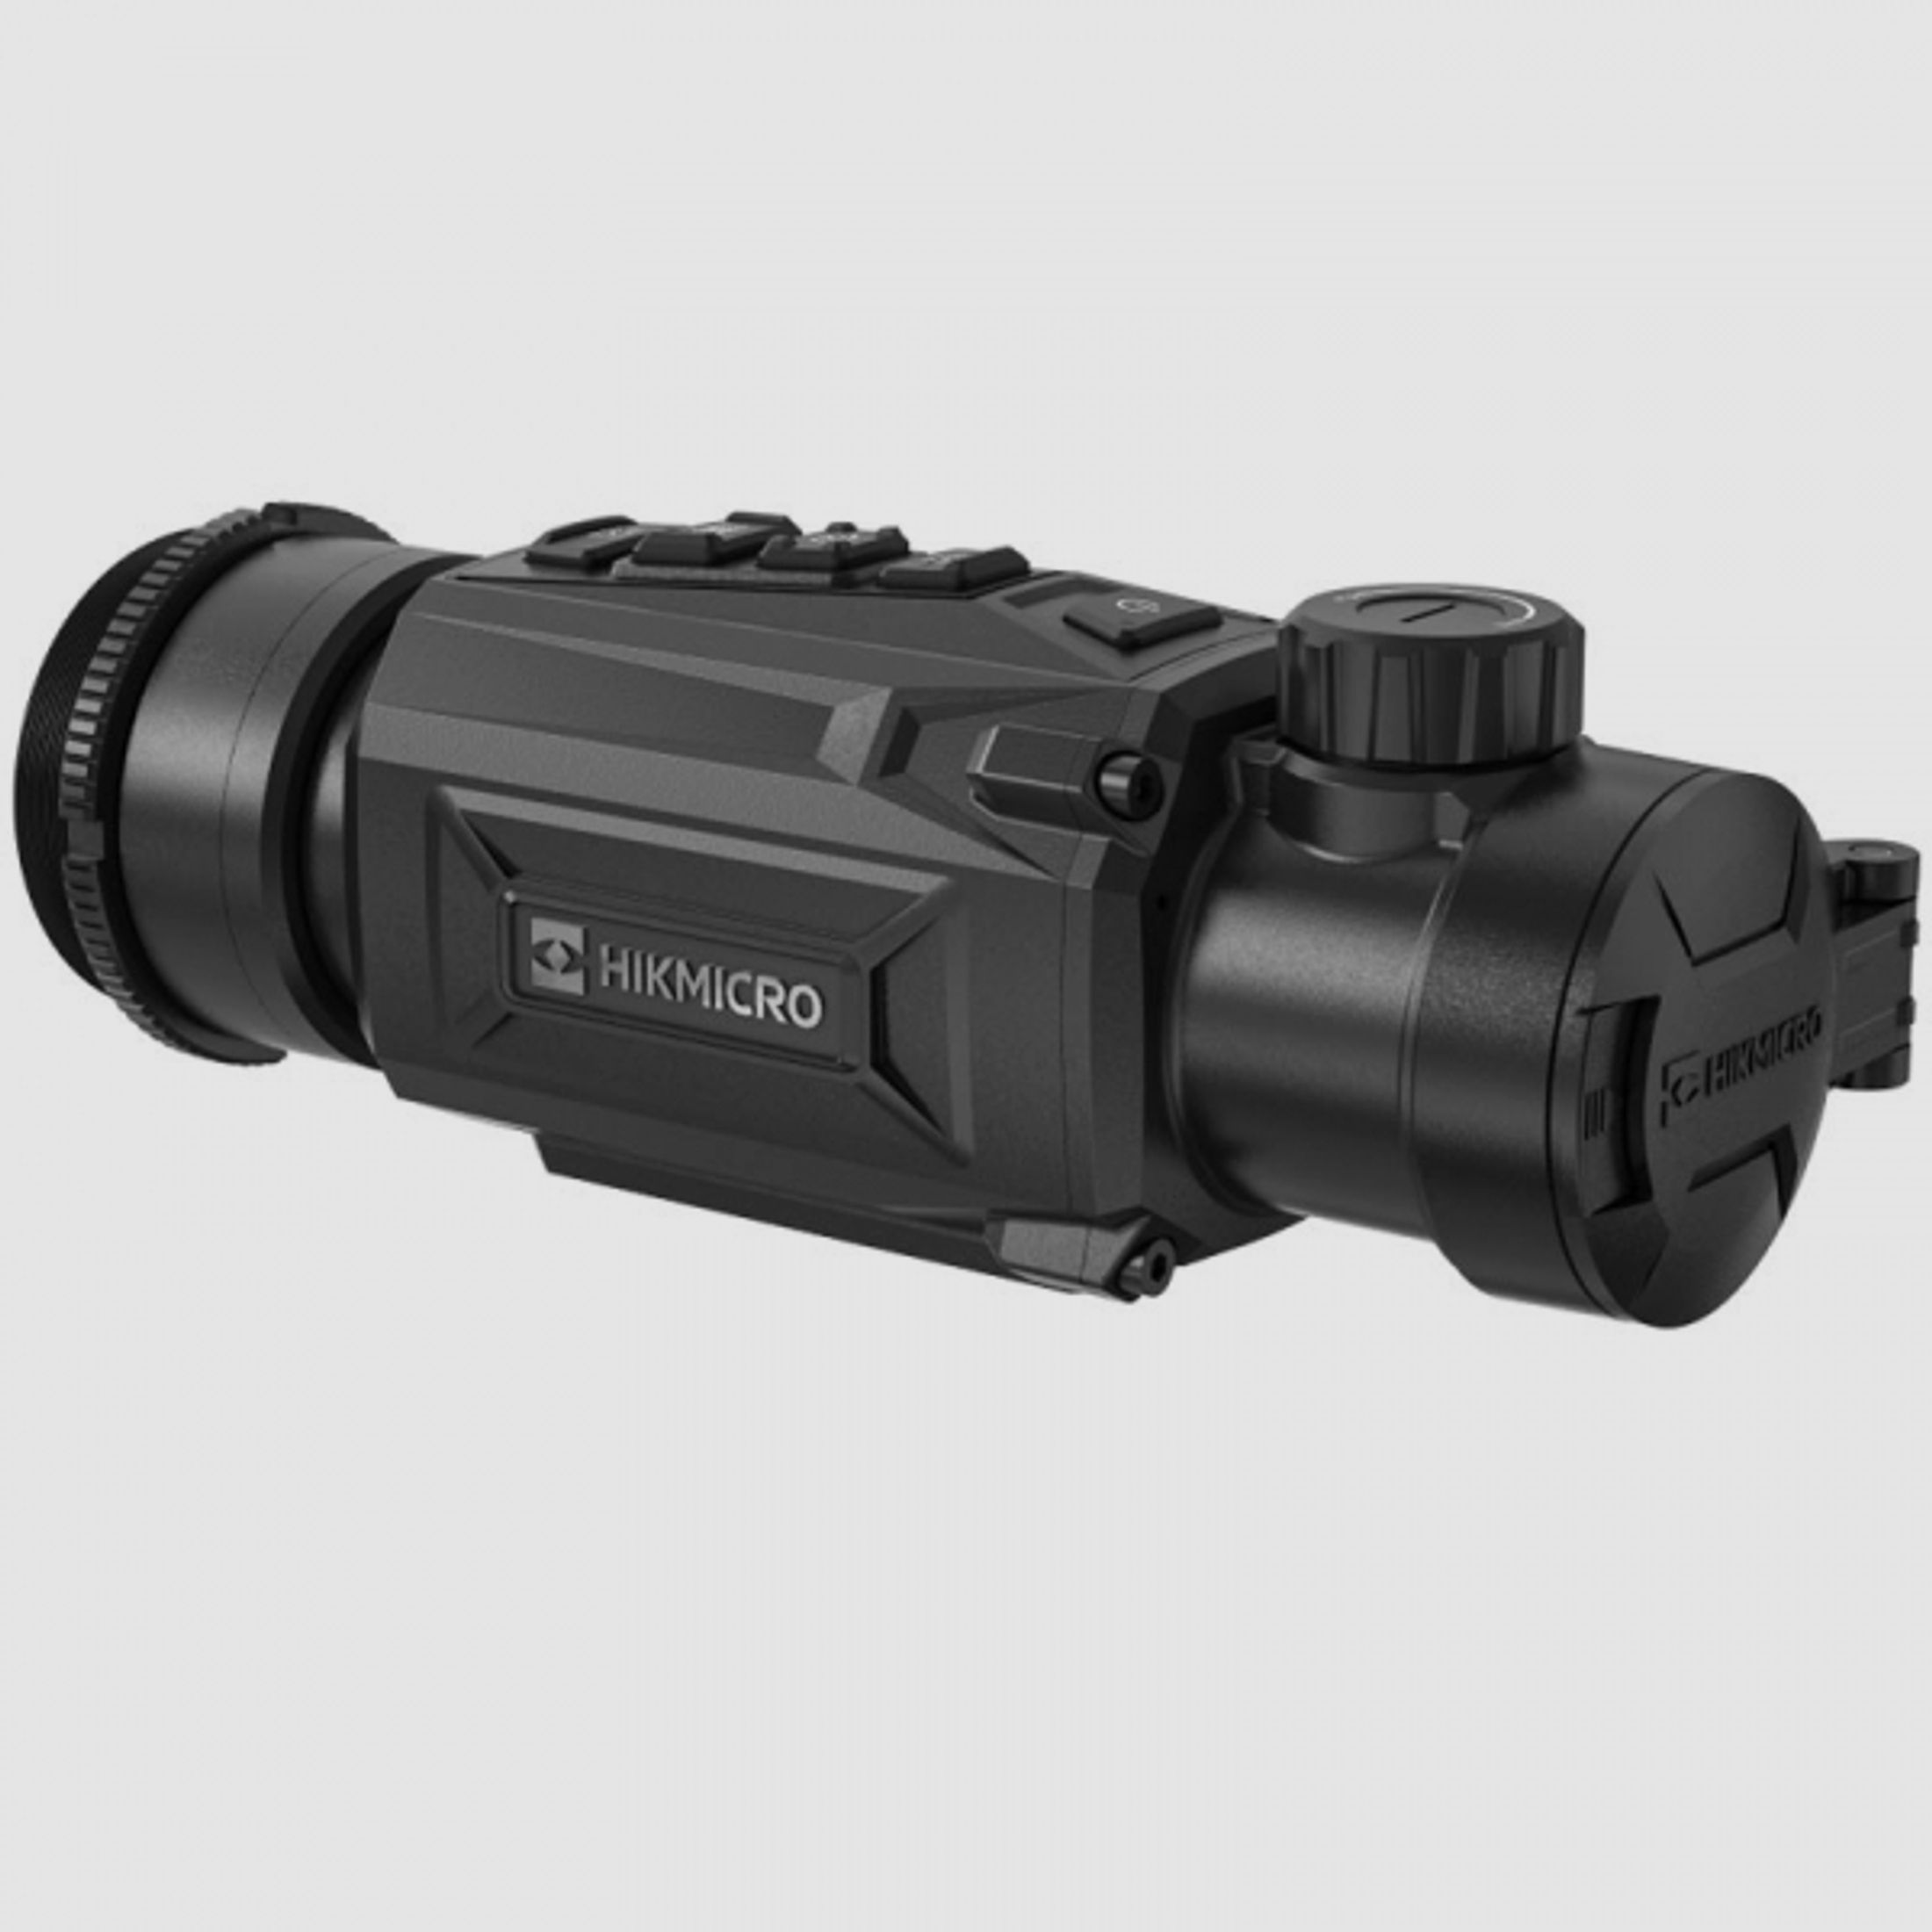 Hikmicro Thunder TH35PC 2.0 Wärmebildkamera Vorsatzgerät Dual Use Nachsichtgerät NEU